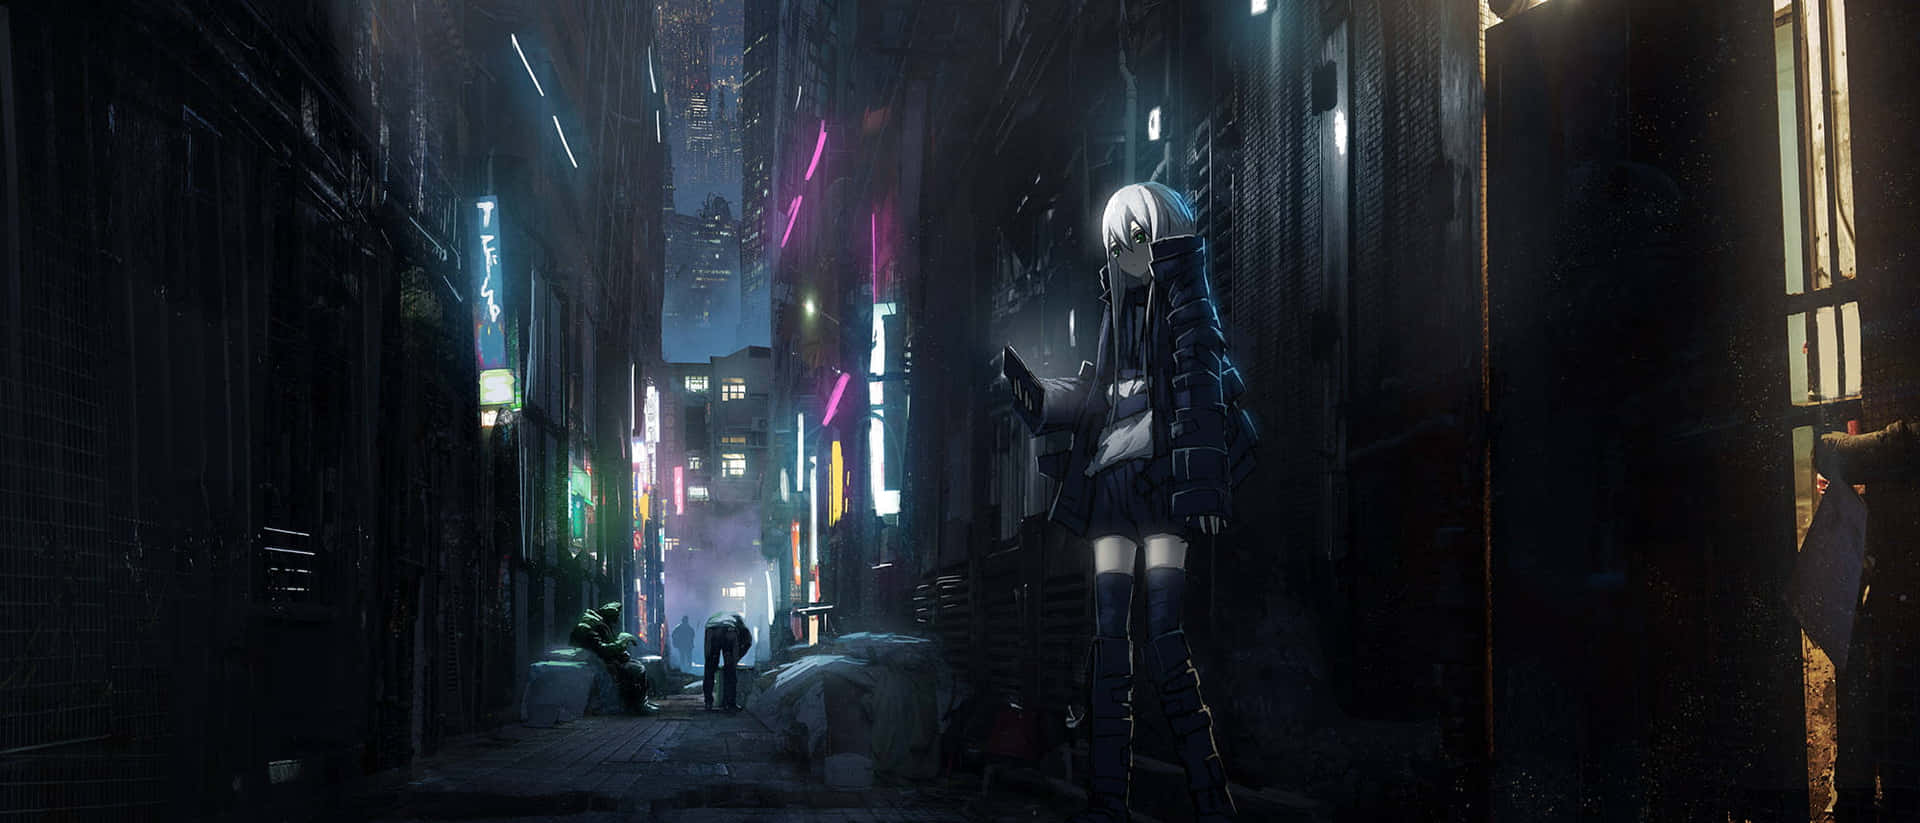 Download Night Scenery In Dark Aesthetic Anime Wallpaper